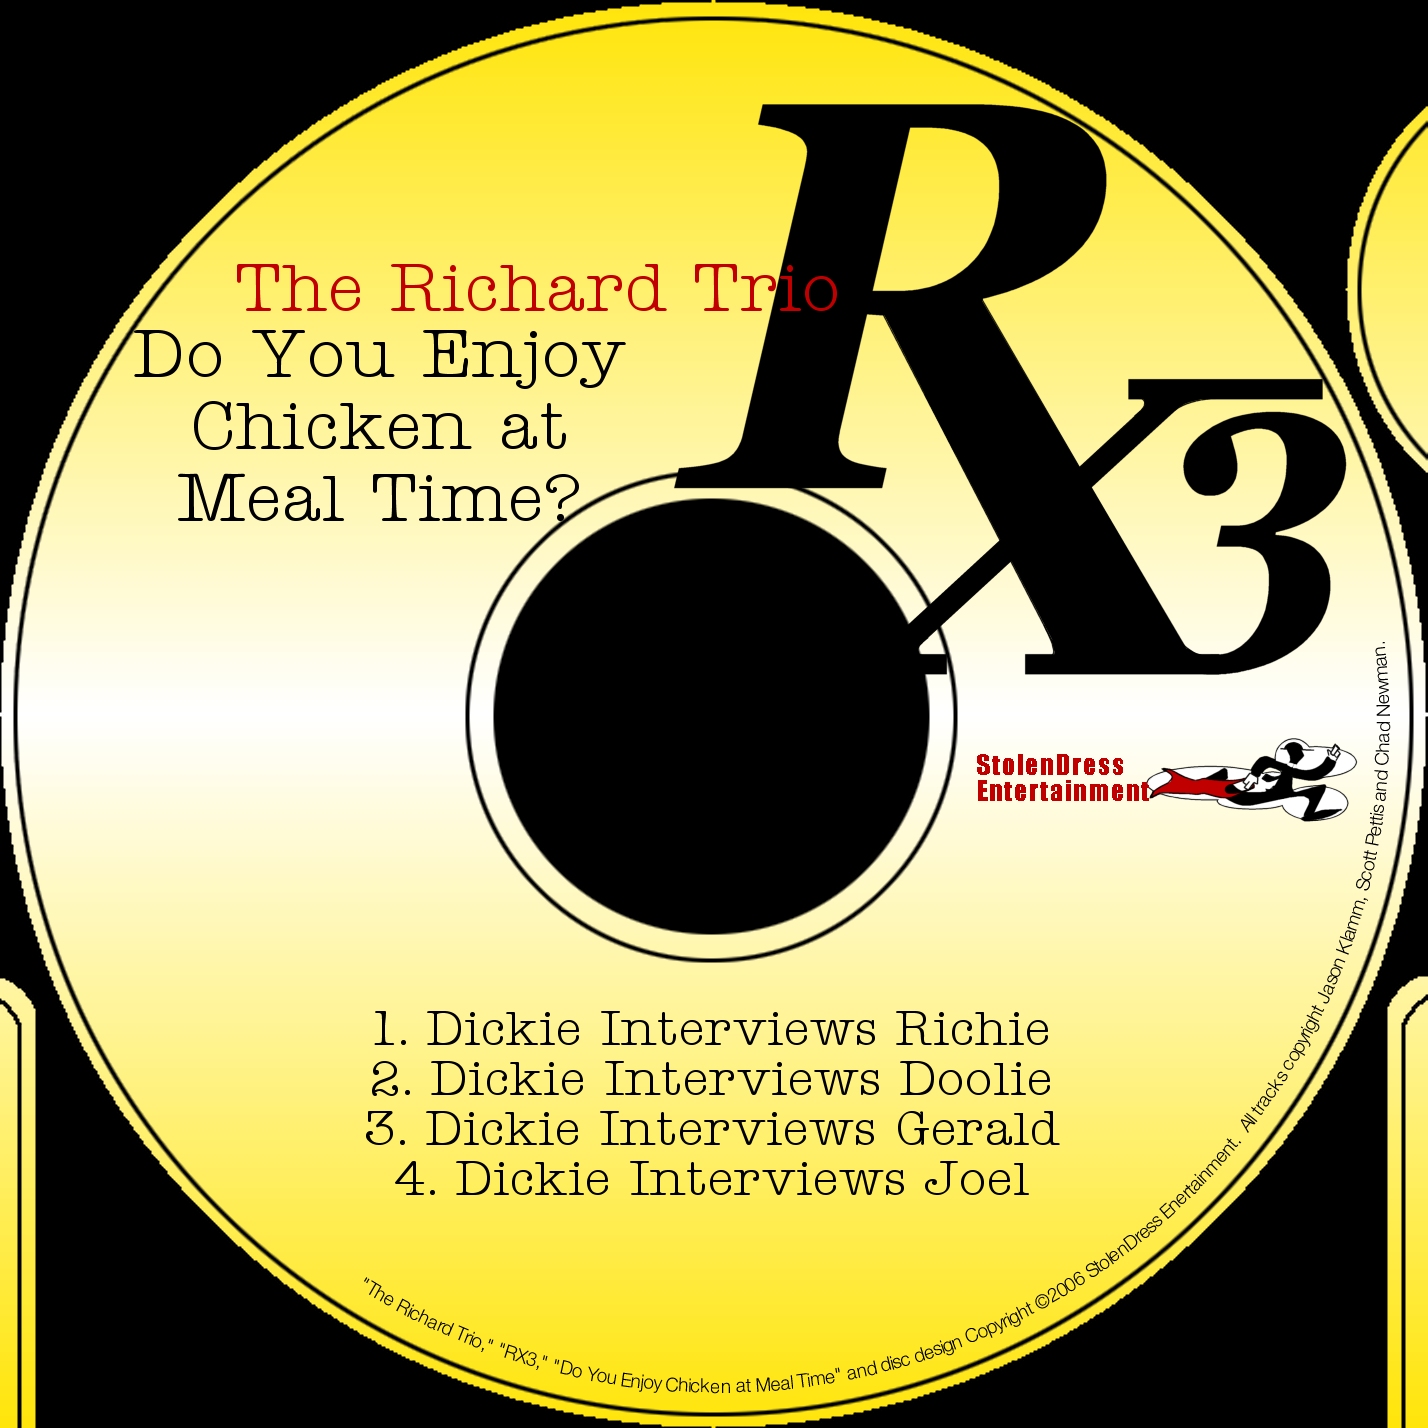 The Richard Trio – Episode 4 – Dickie Interviews Joel